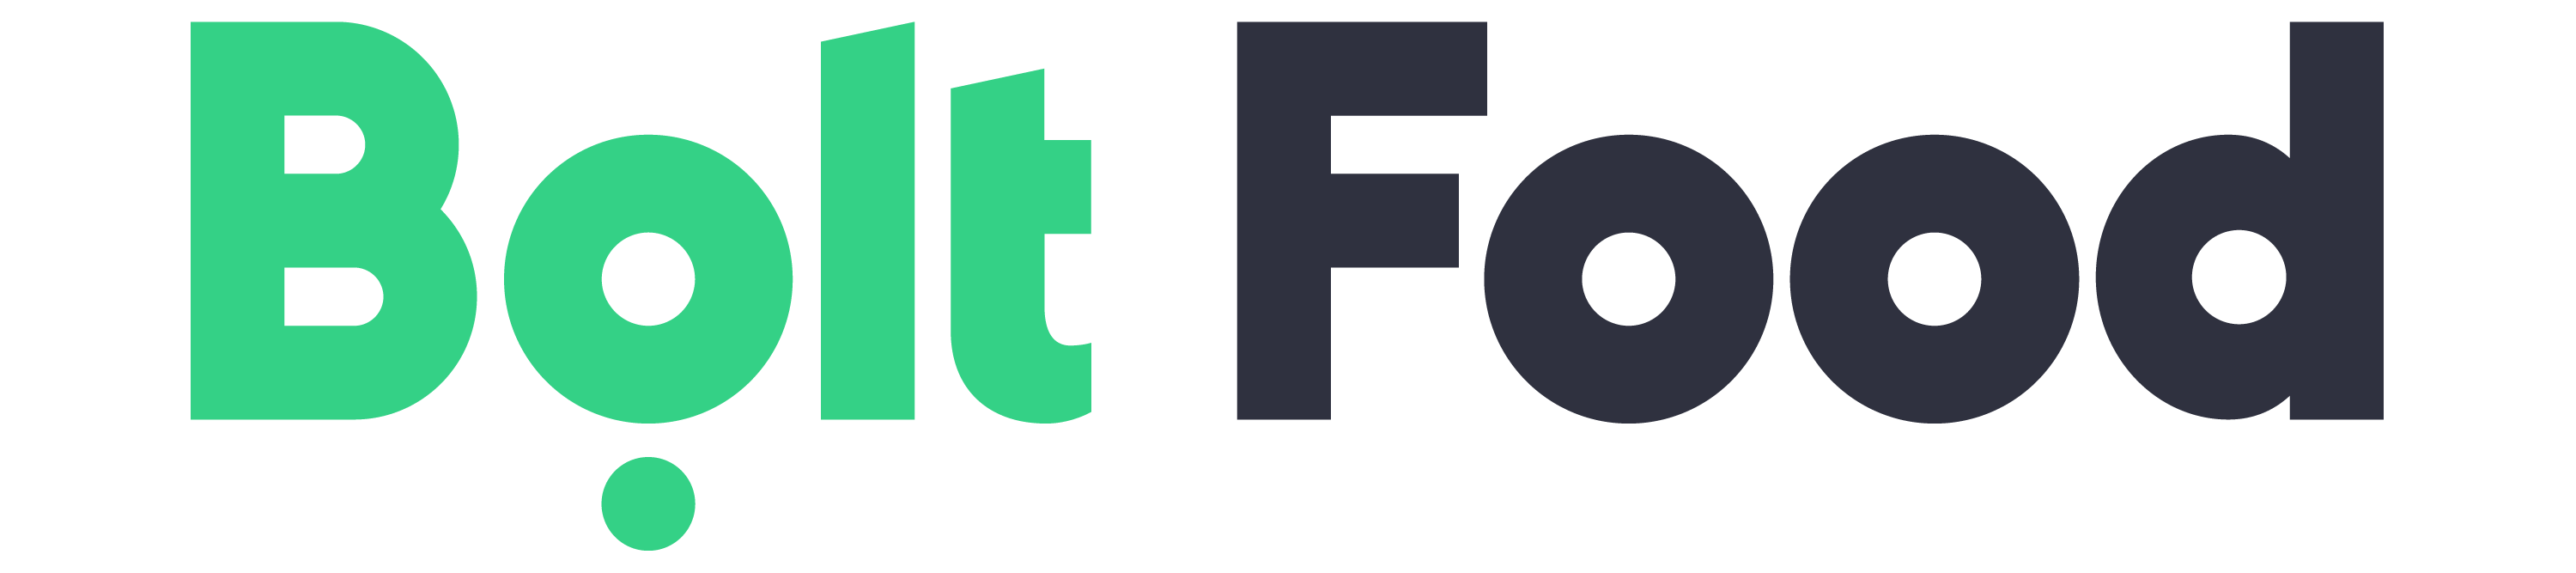 bolt food logo